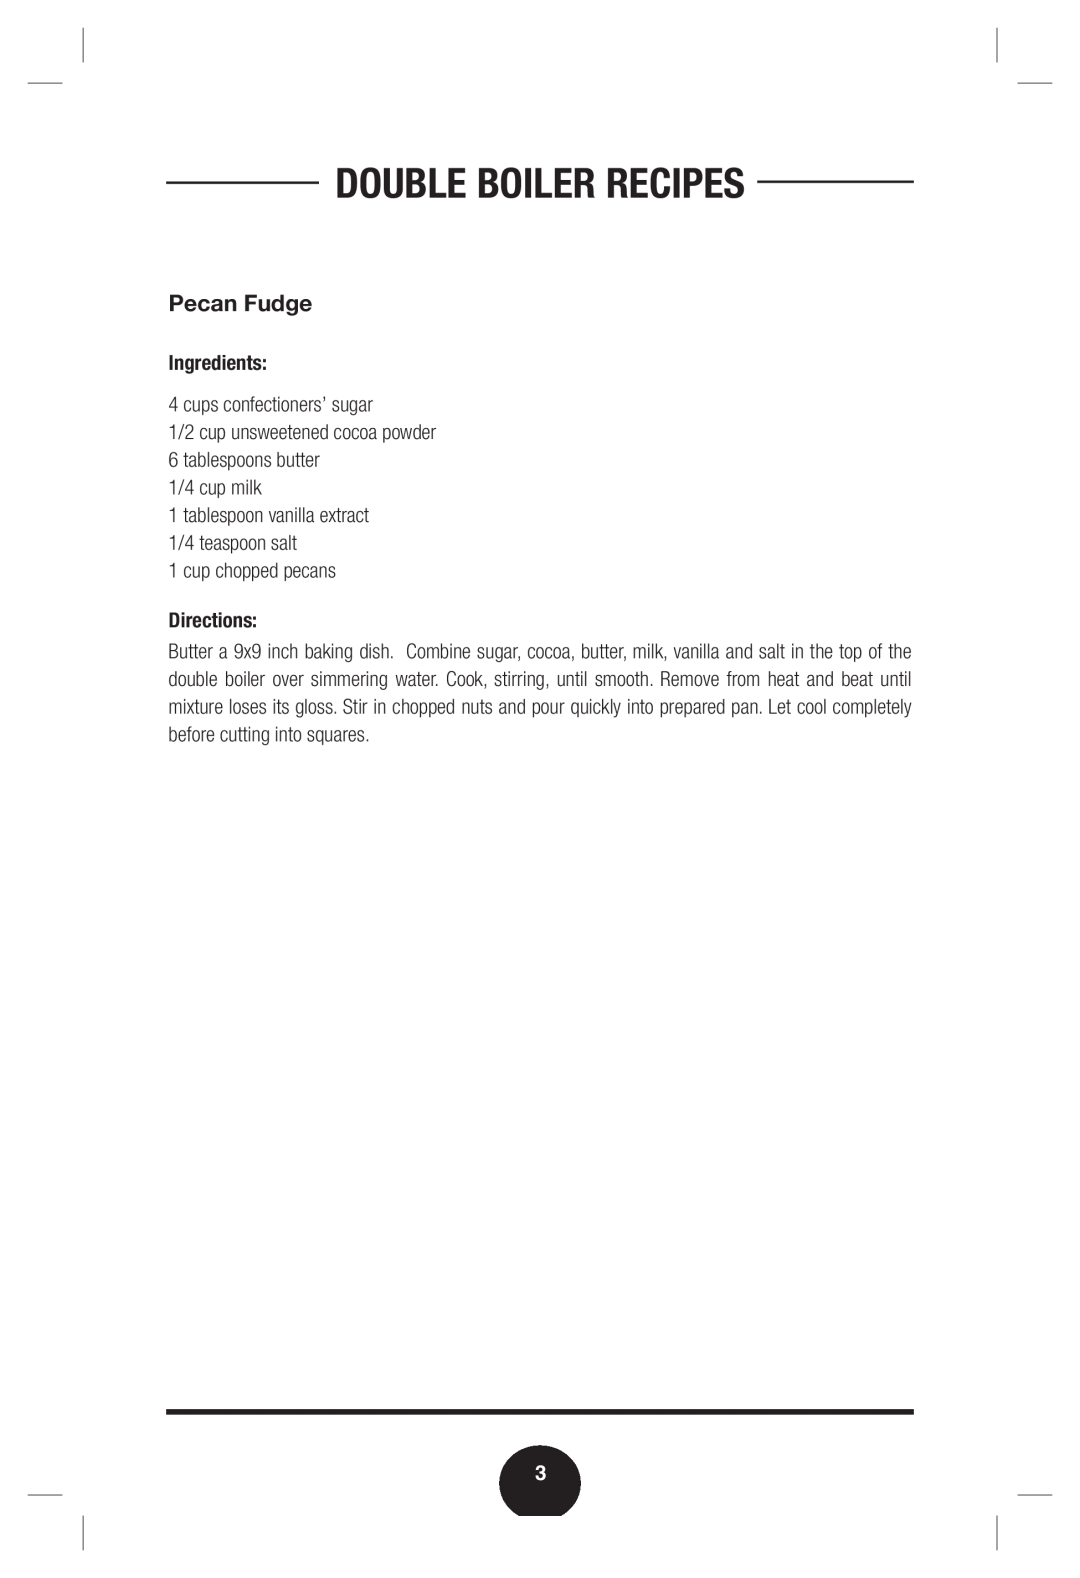 Fagor America Pecan Fudge, Double Boiler Recipes, Ingredients, cups confectioners’ sugar, 1/4 cup milk, Directions 